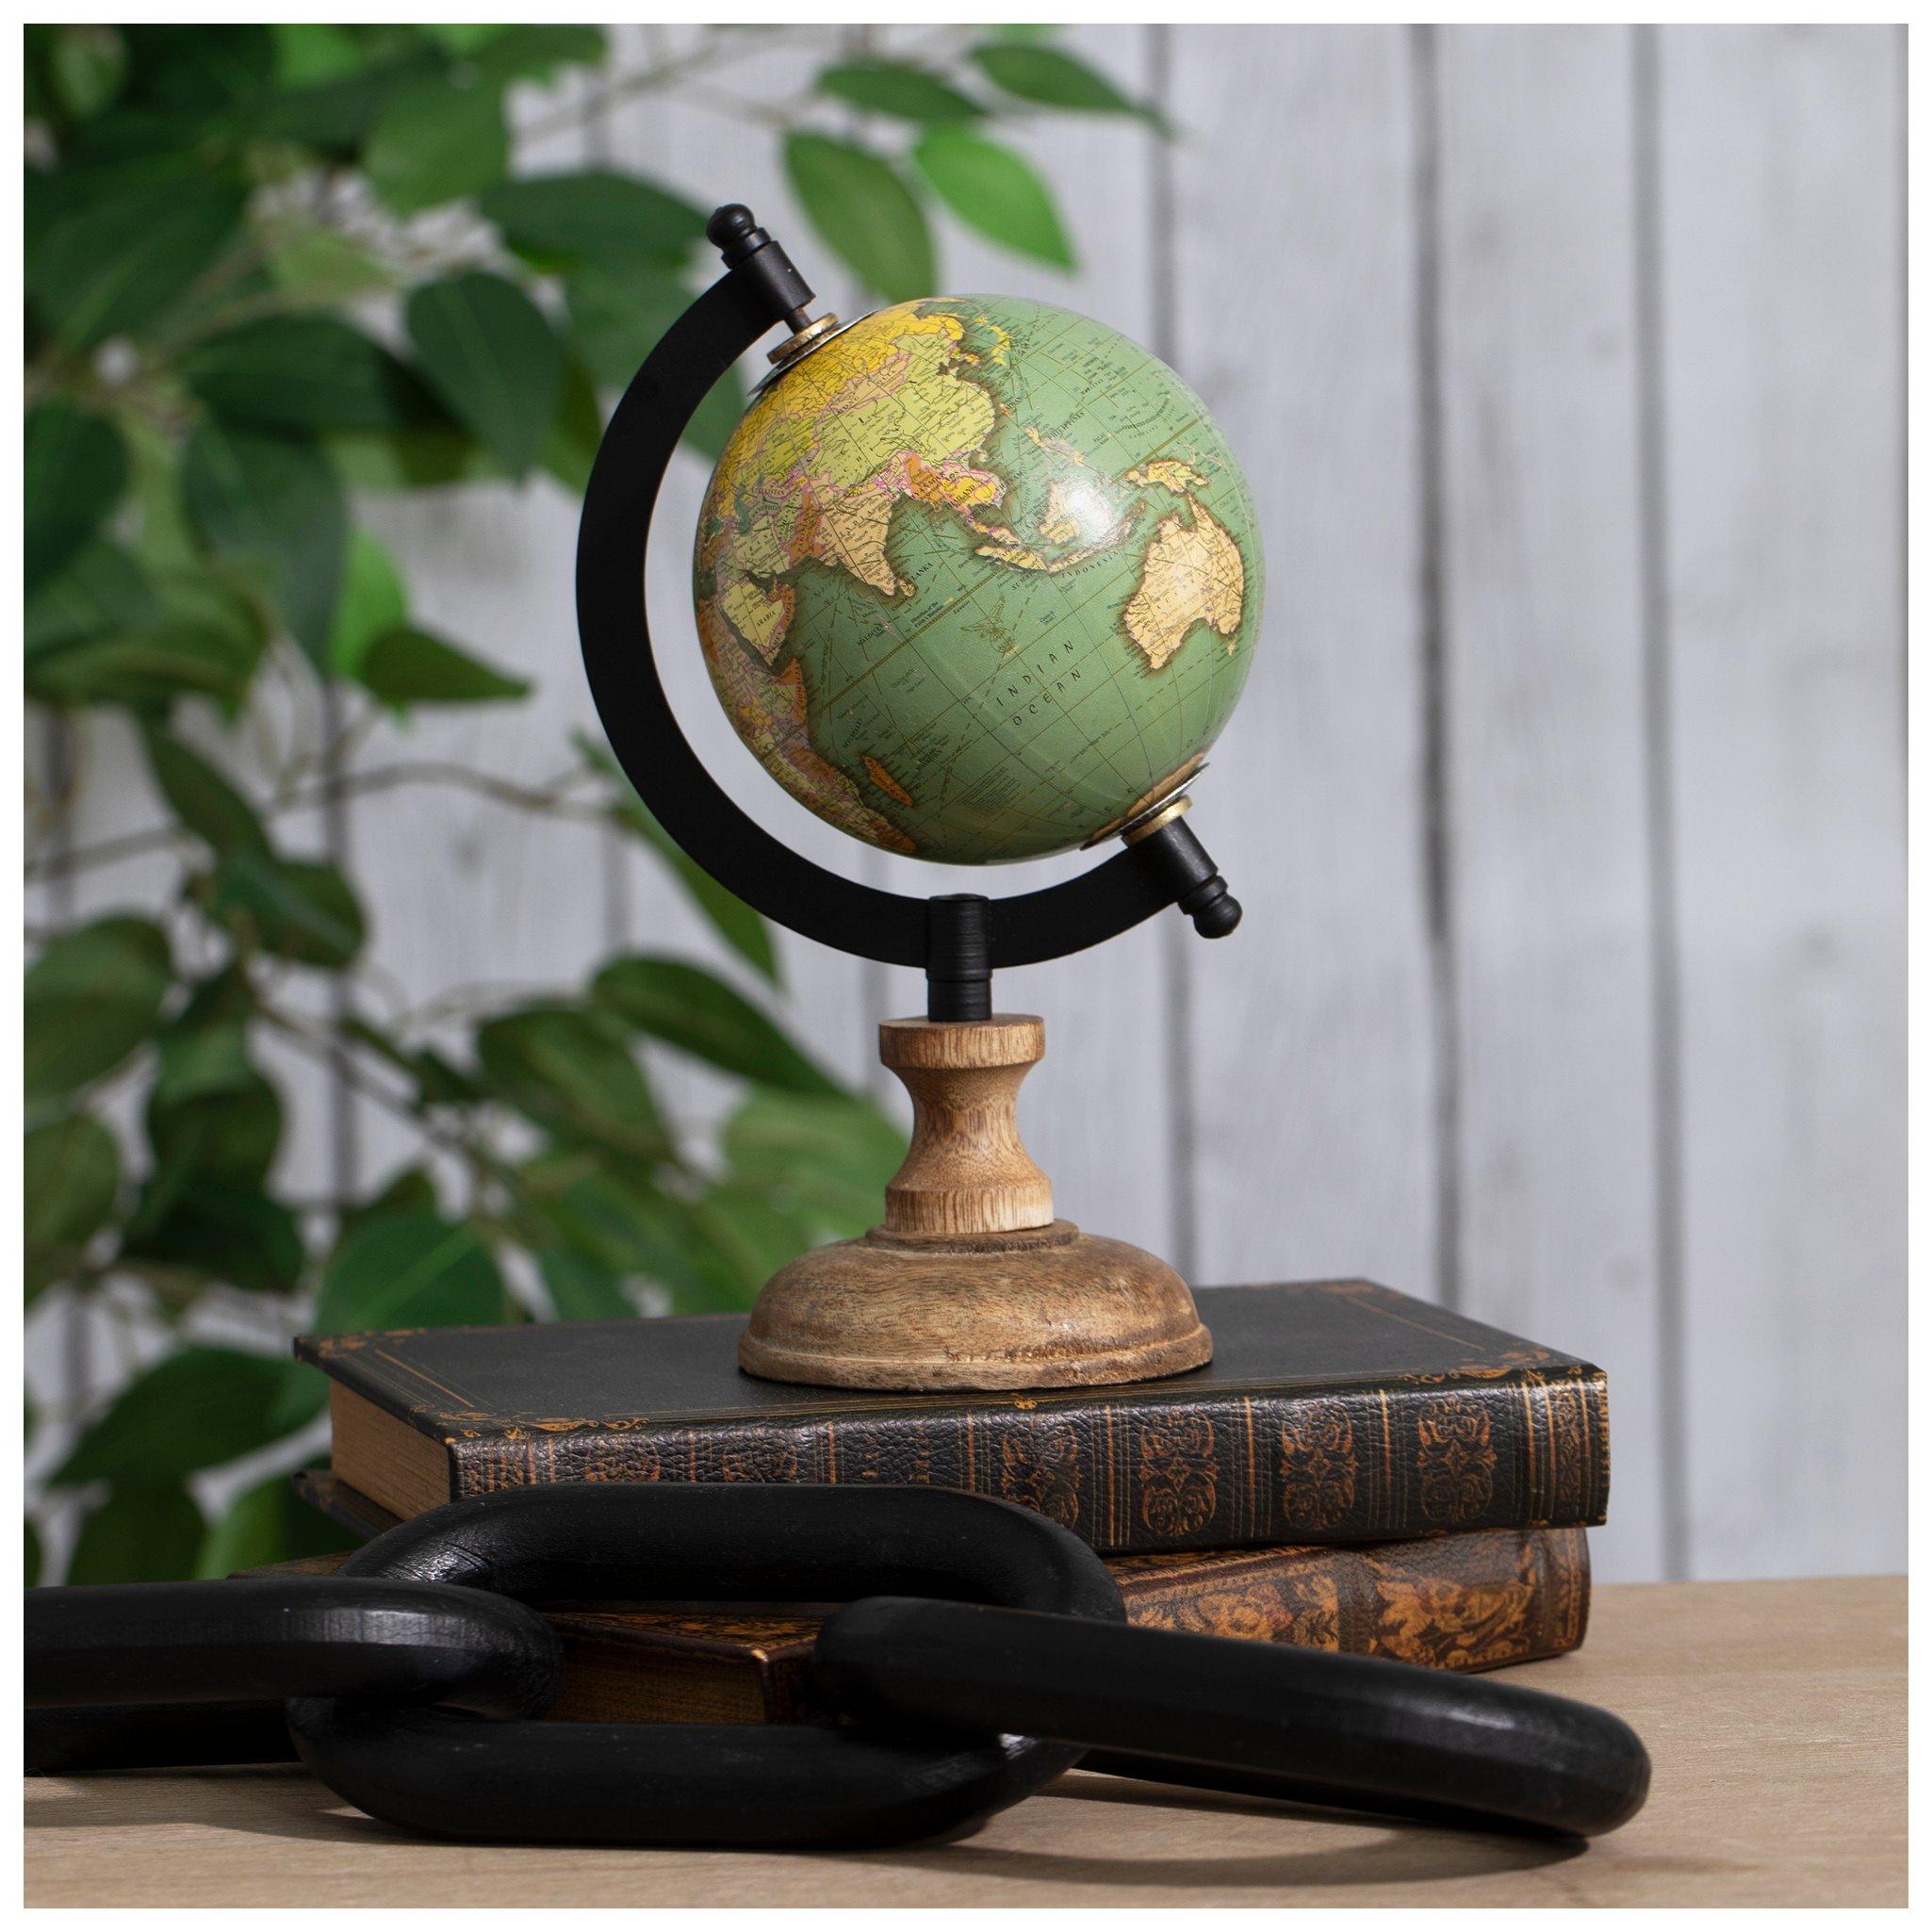 Vintage Globe Brand Brass Padlock Original Key Decorative Collectible PD37